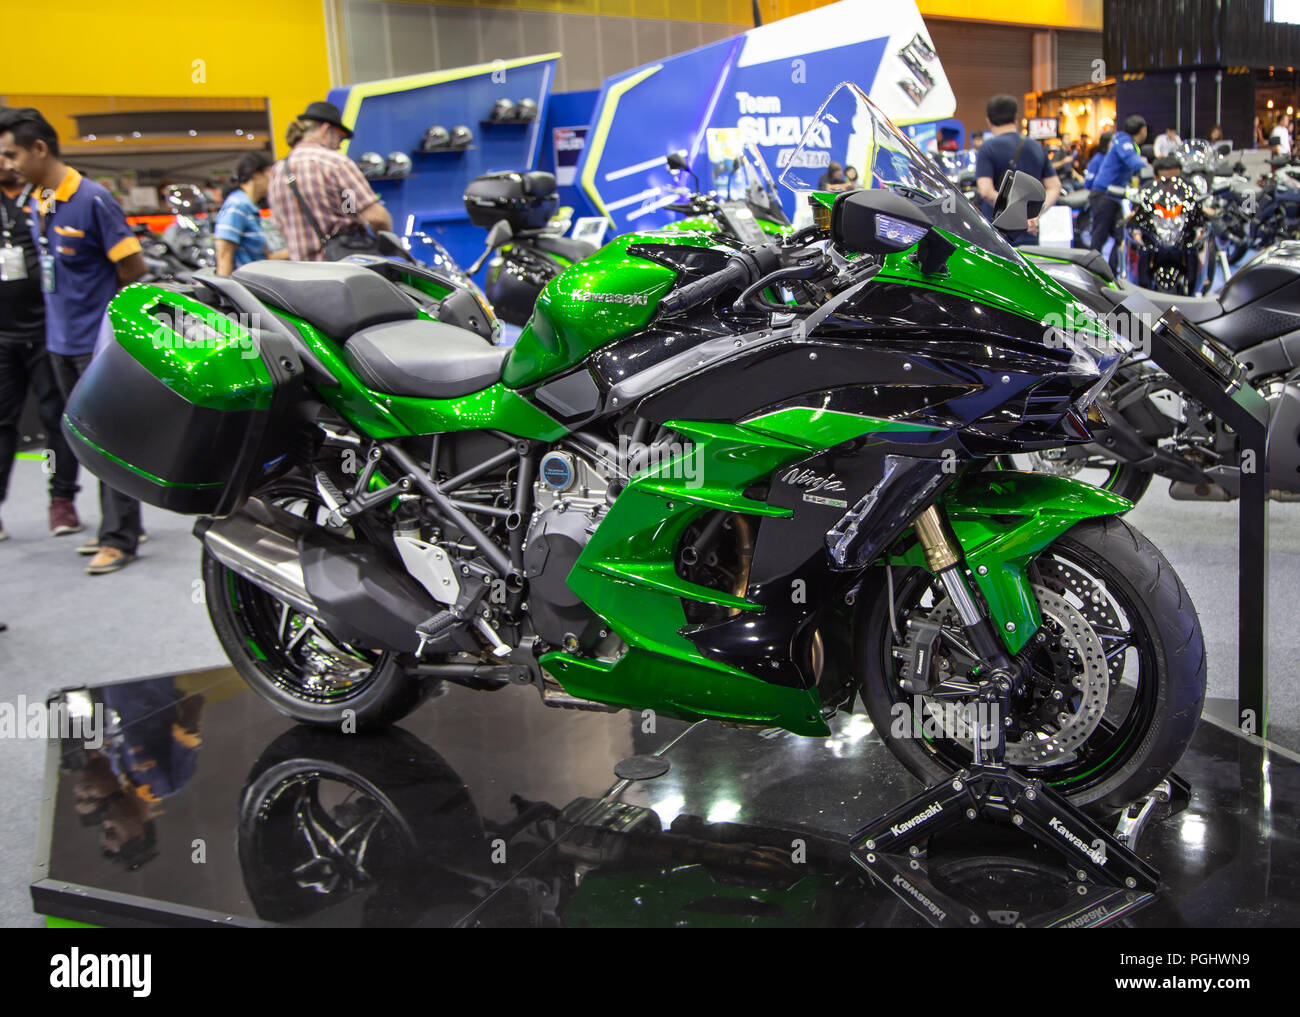 Kawasaki Motorcycle Engine High Resolution Stock Photography and Images -  Alamy